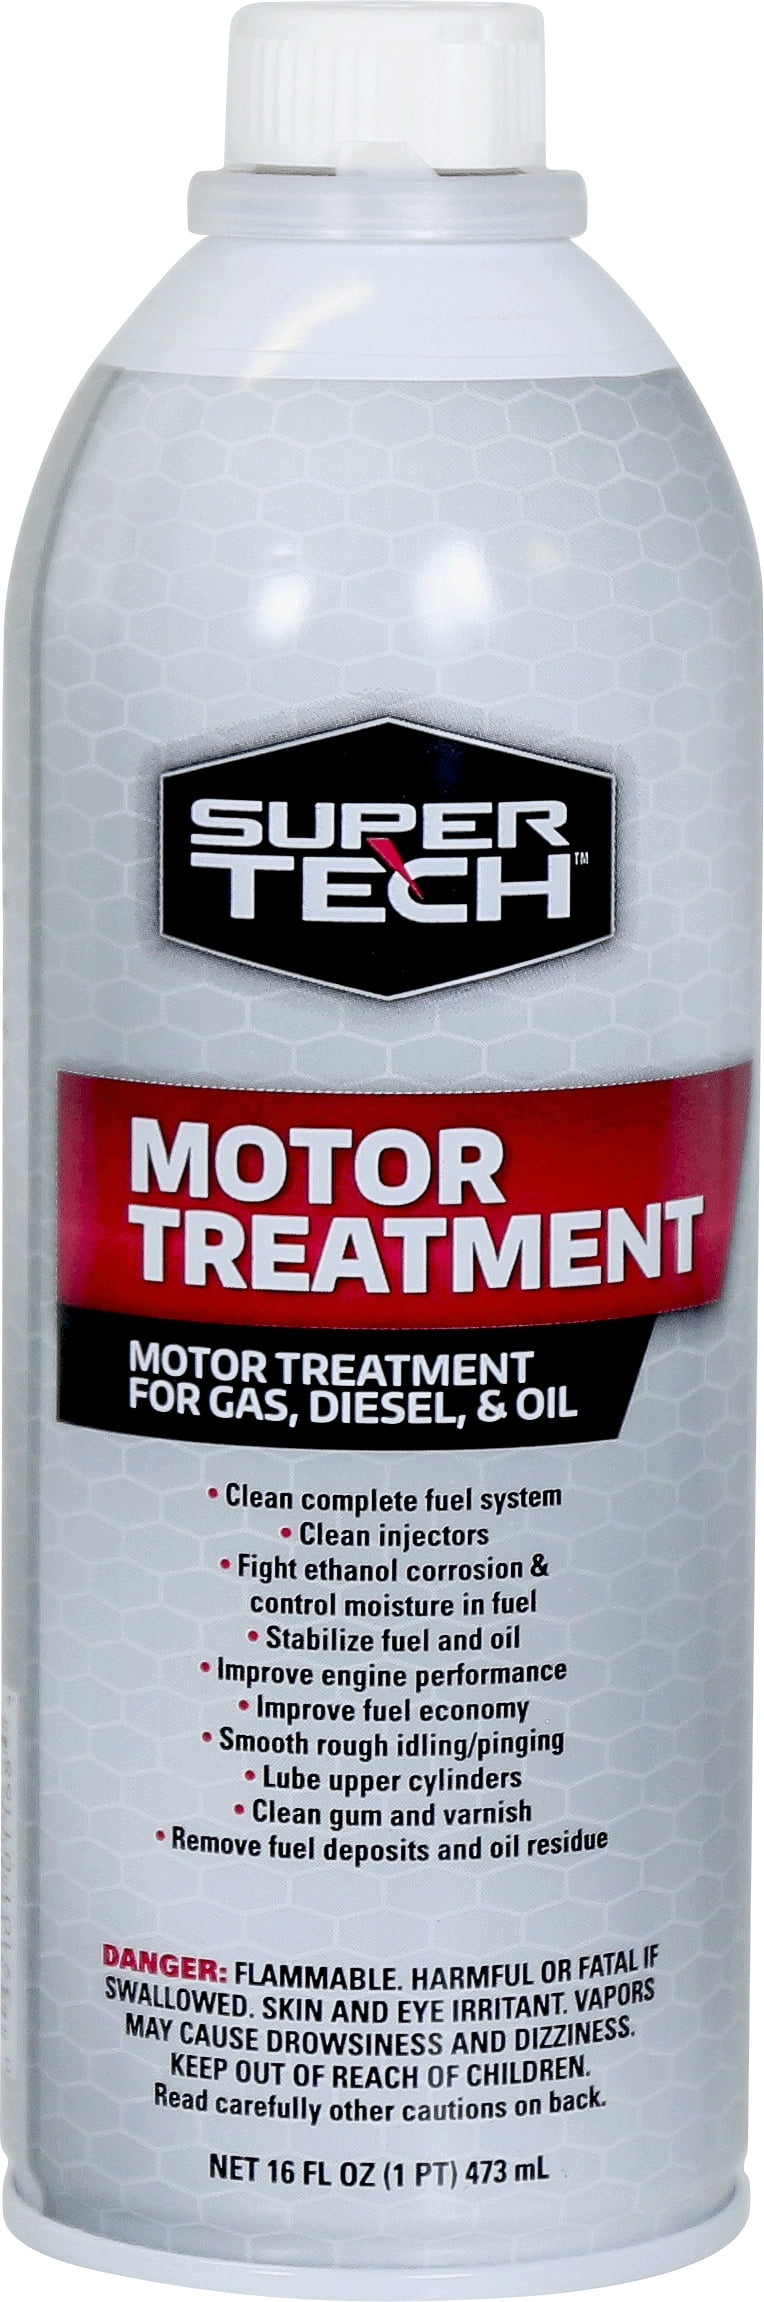 Super Tech Motor Treatment  Automotive Additive for Gas, Diesel, & Oil, 16 fl. oz.